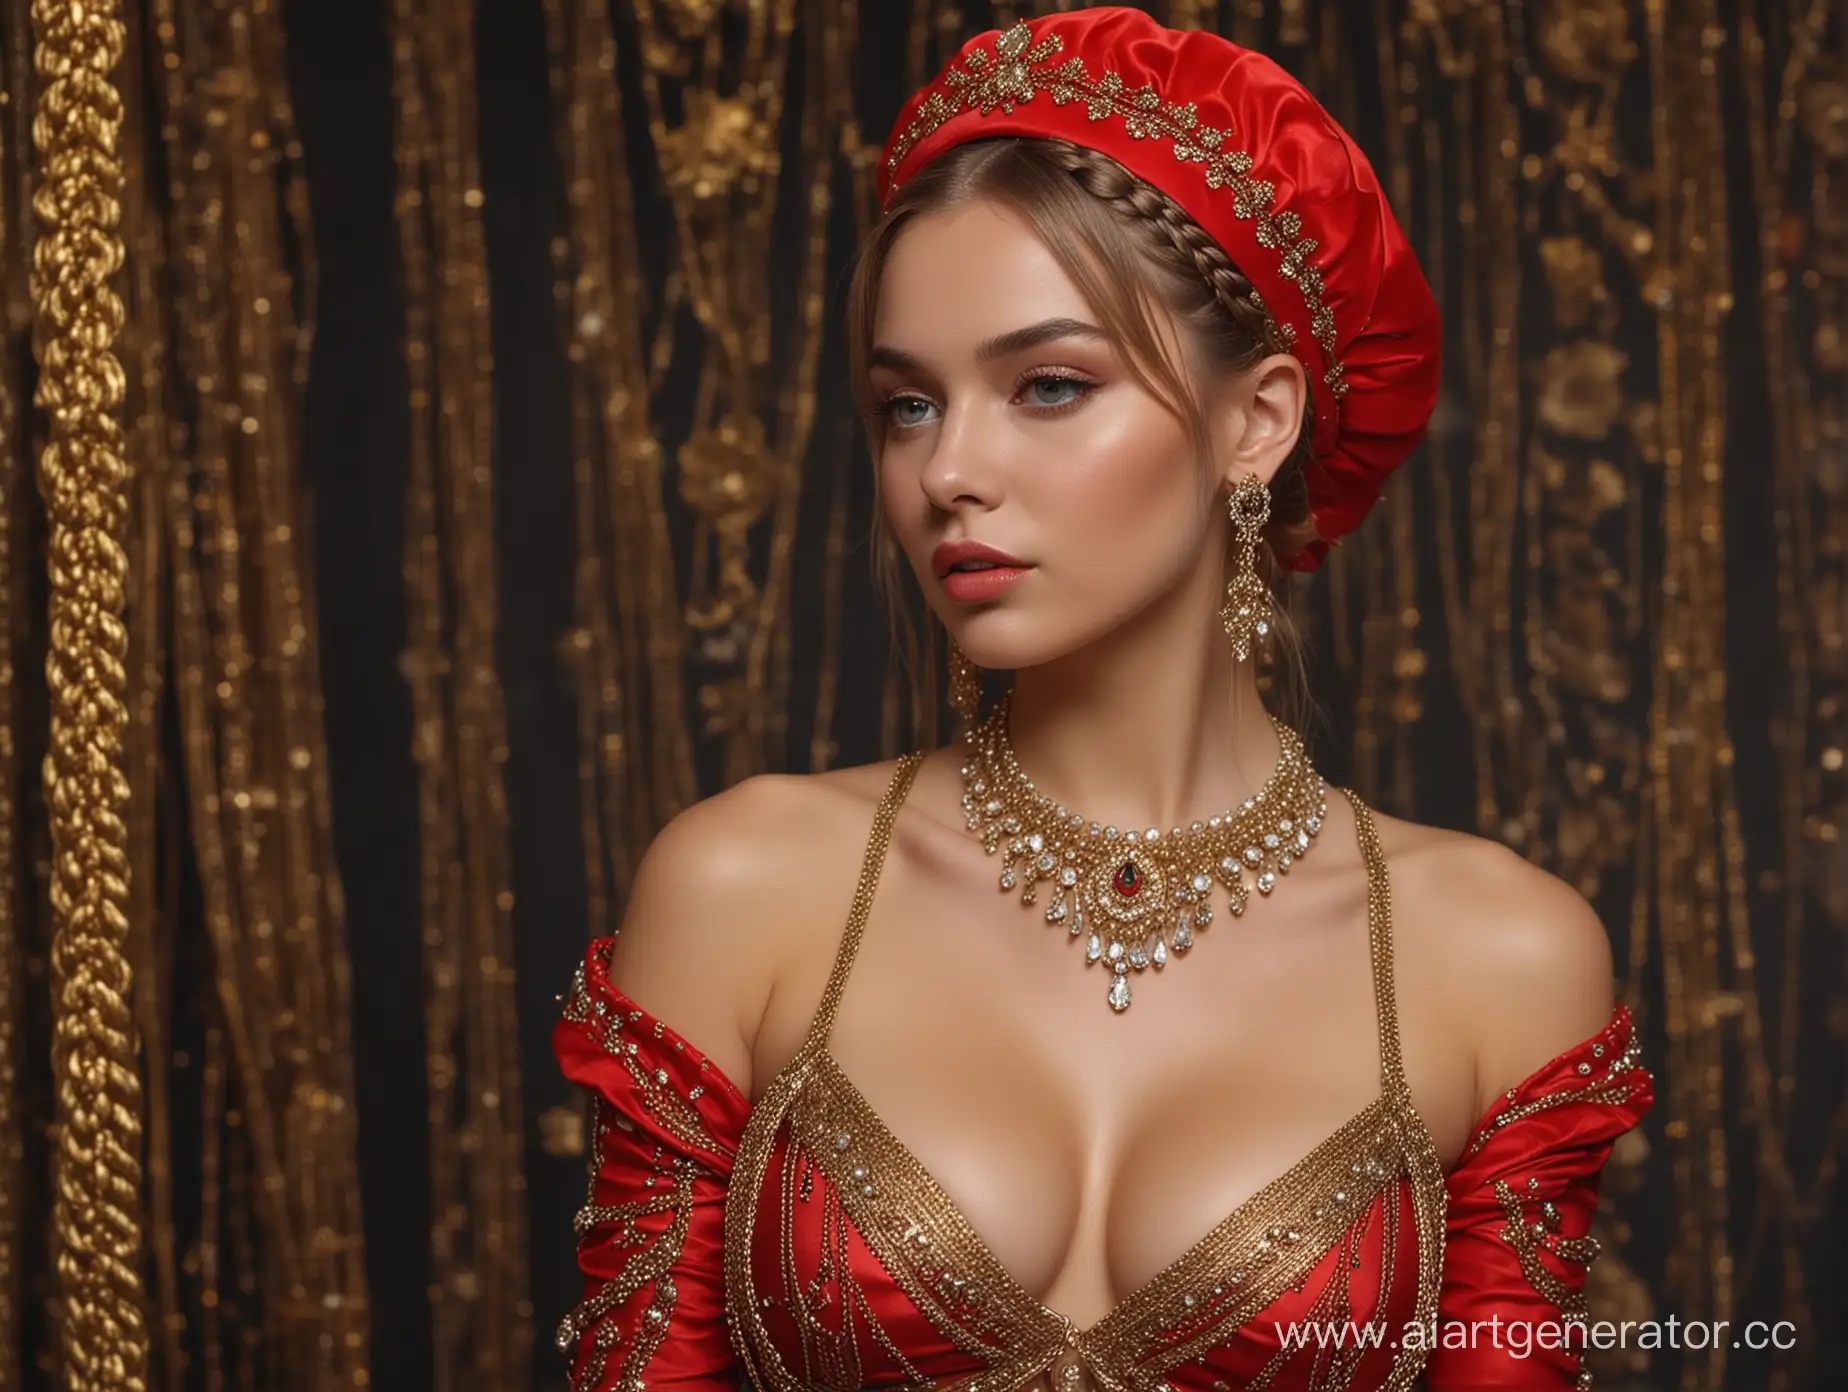 Enchanting-Russian-Beauty-in-Regal-Attire-Kokoshnik-Gold-and-Diamonds